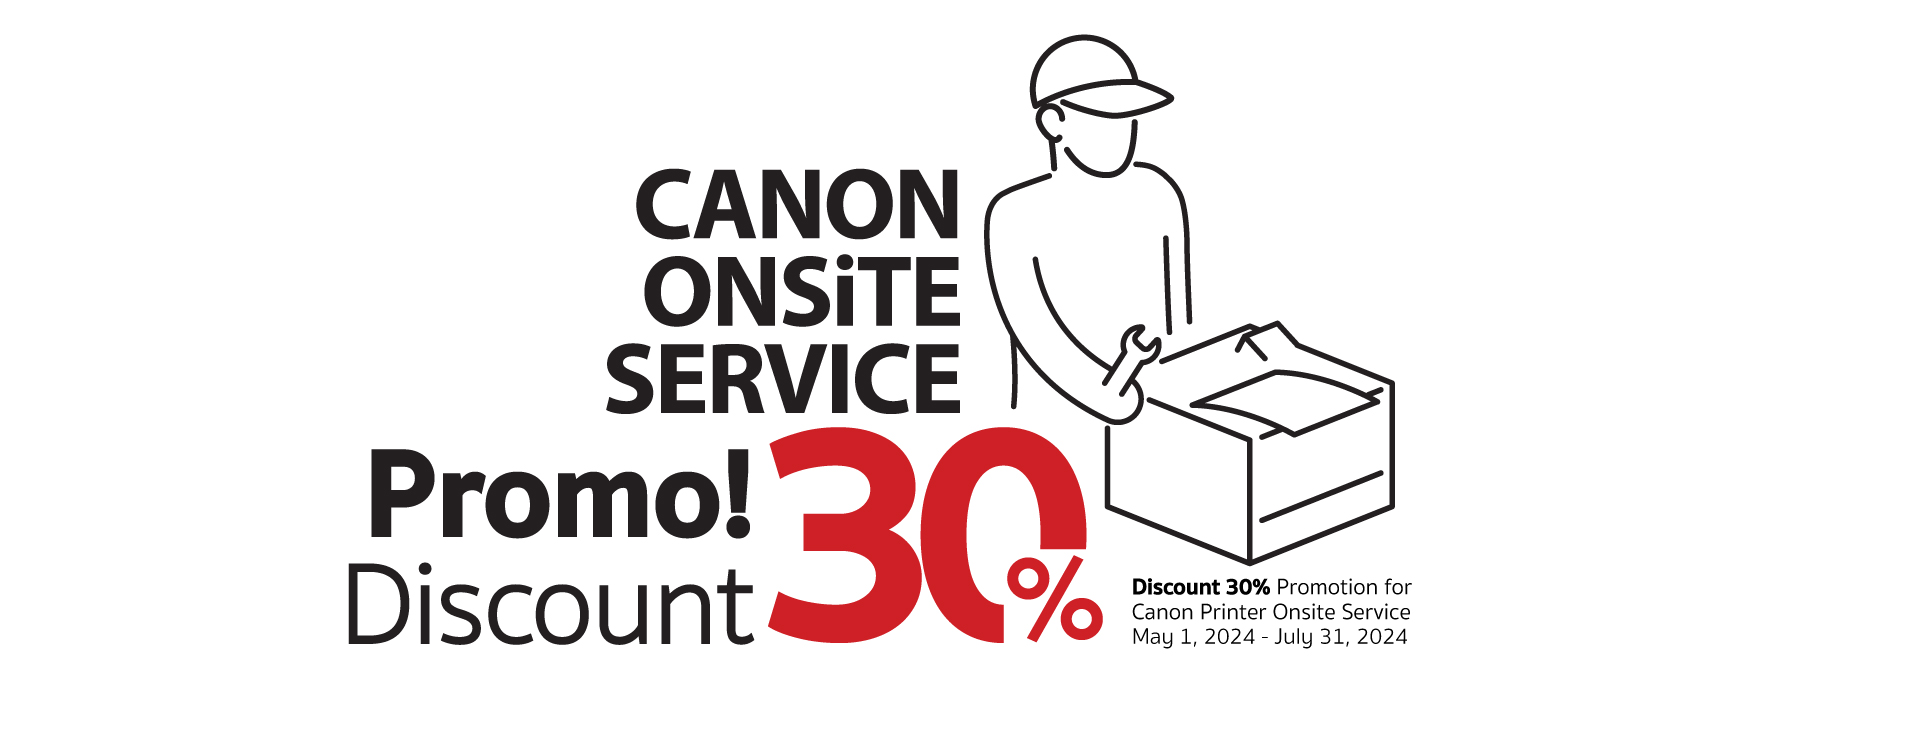 Canon-onsite-service-discount-30-percent-EN.jpg